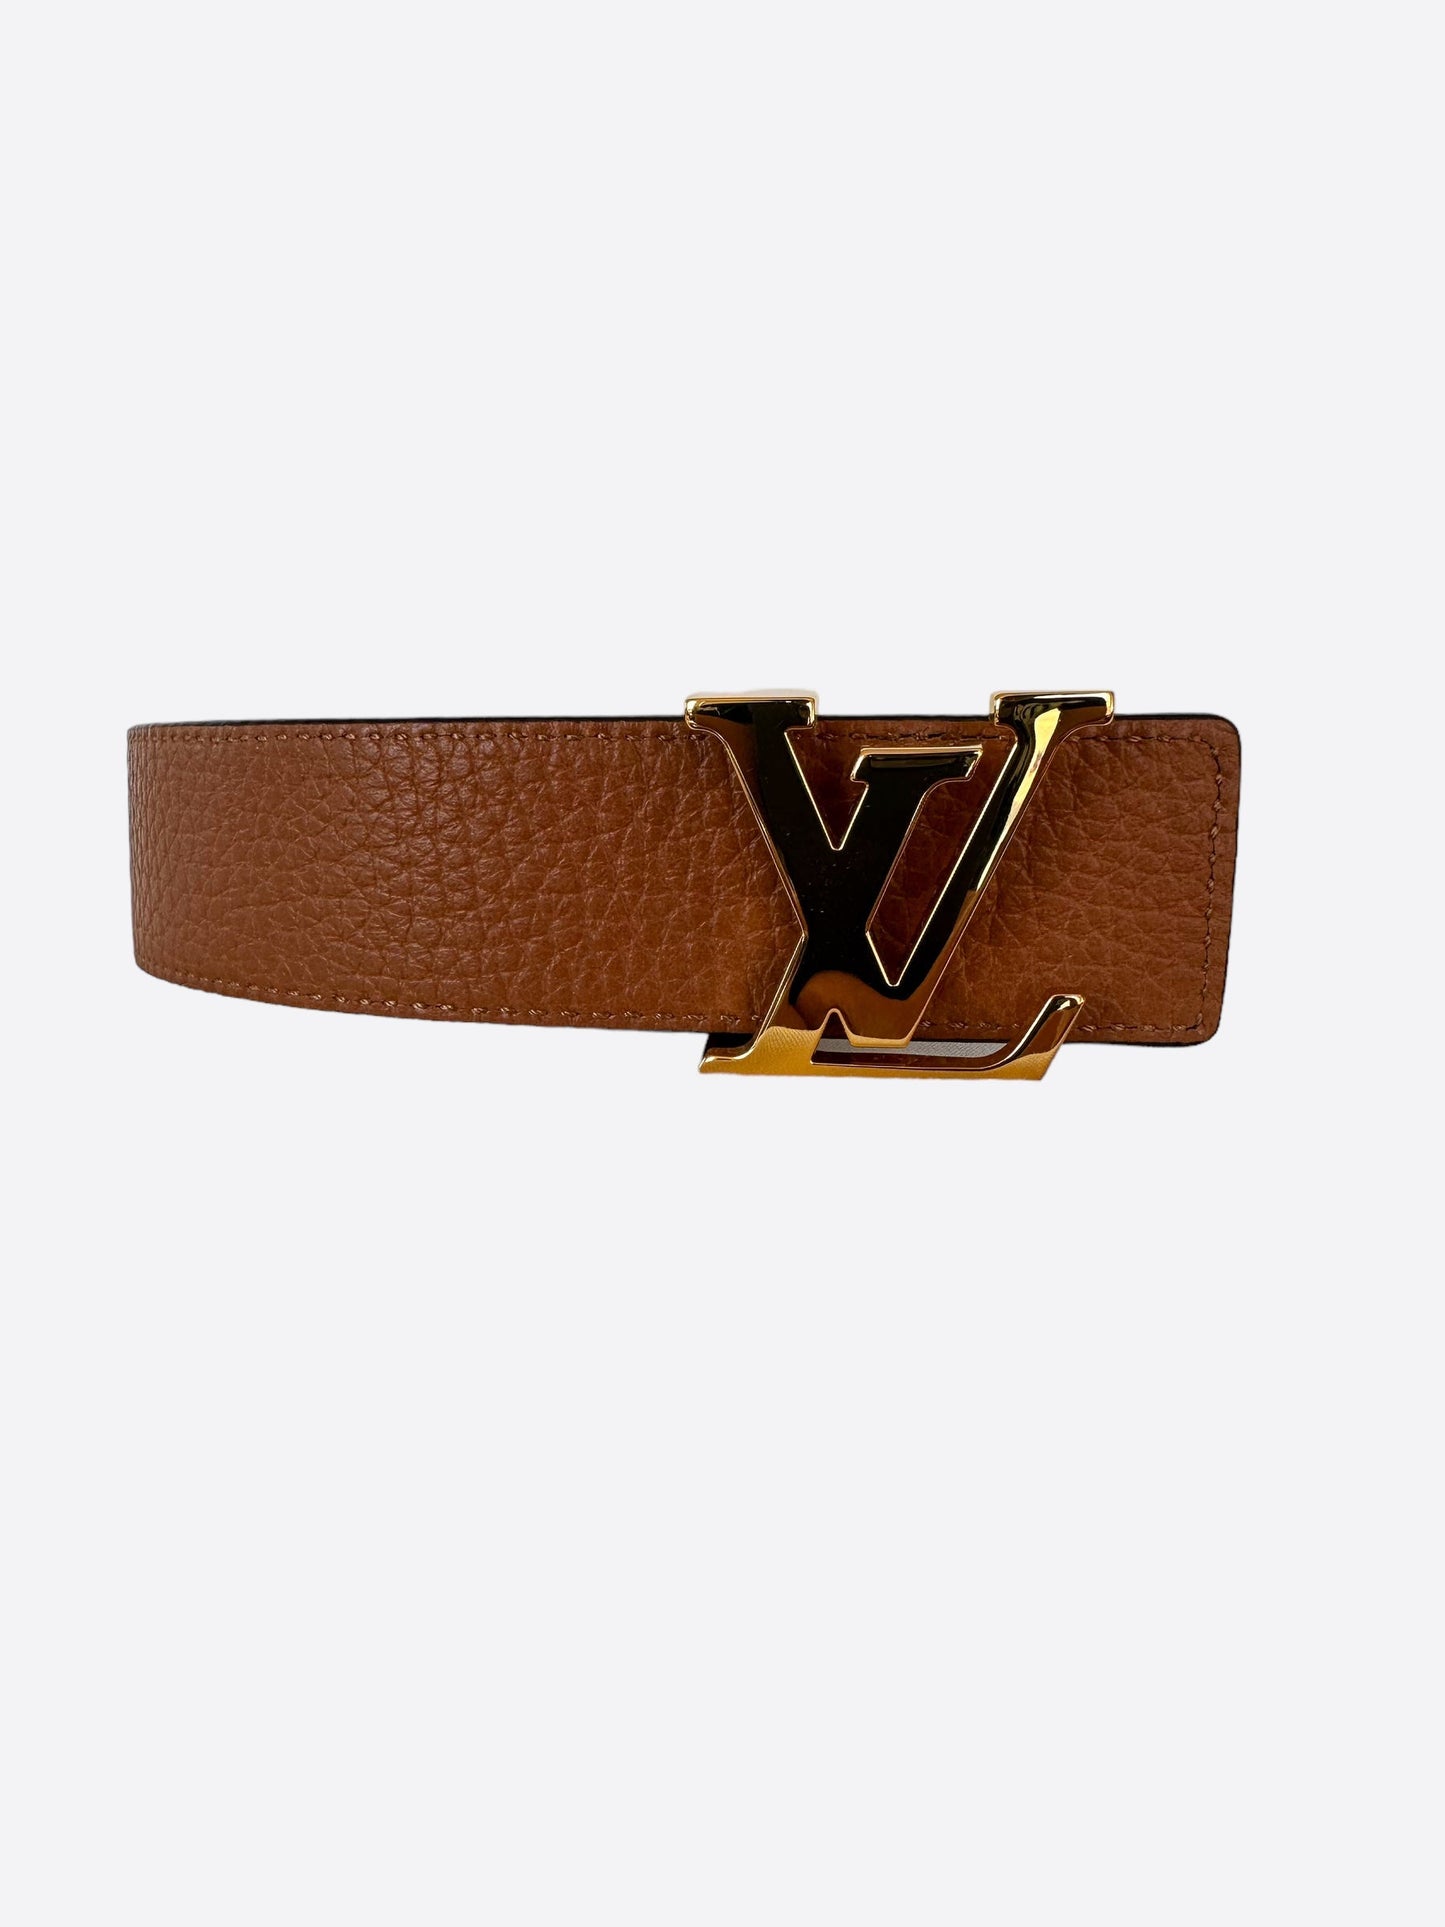 Louis Vuitton Black/Brown Leather Reversible Initiales Belt Louis